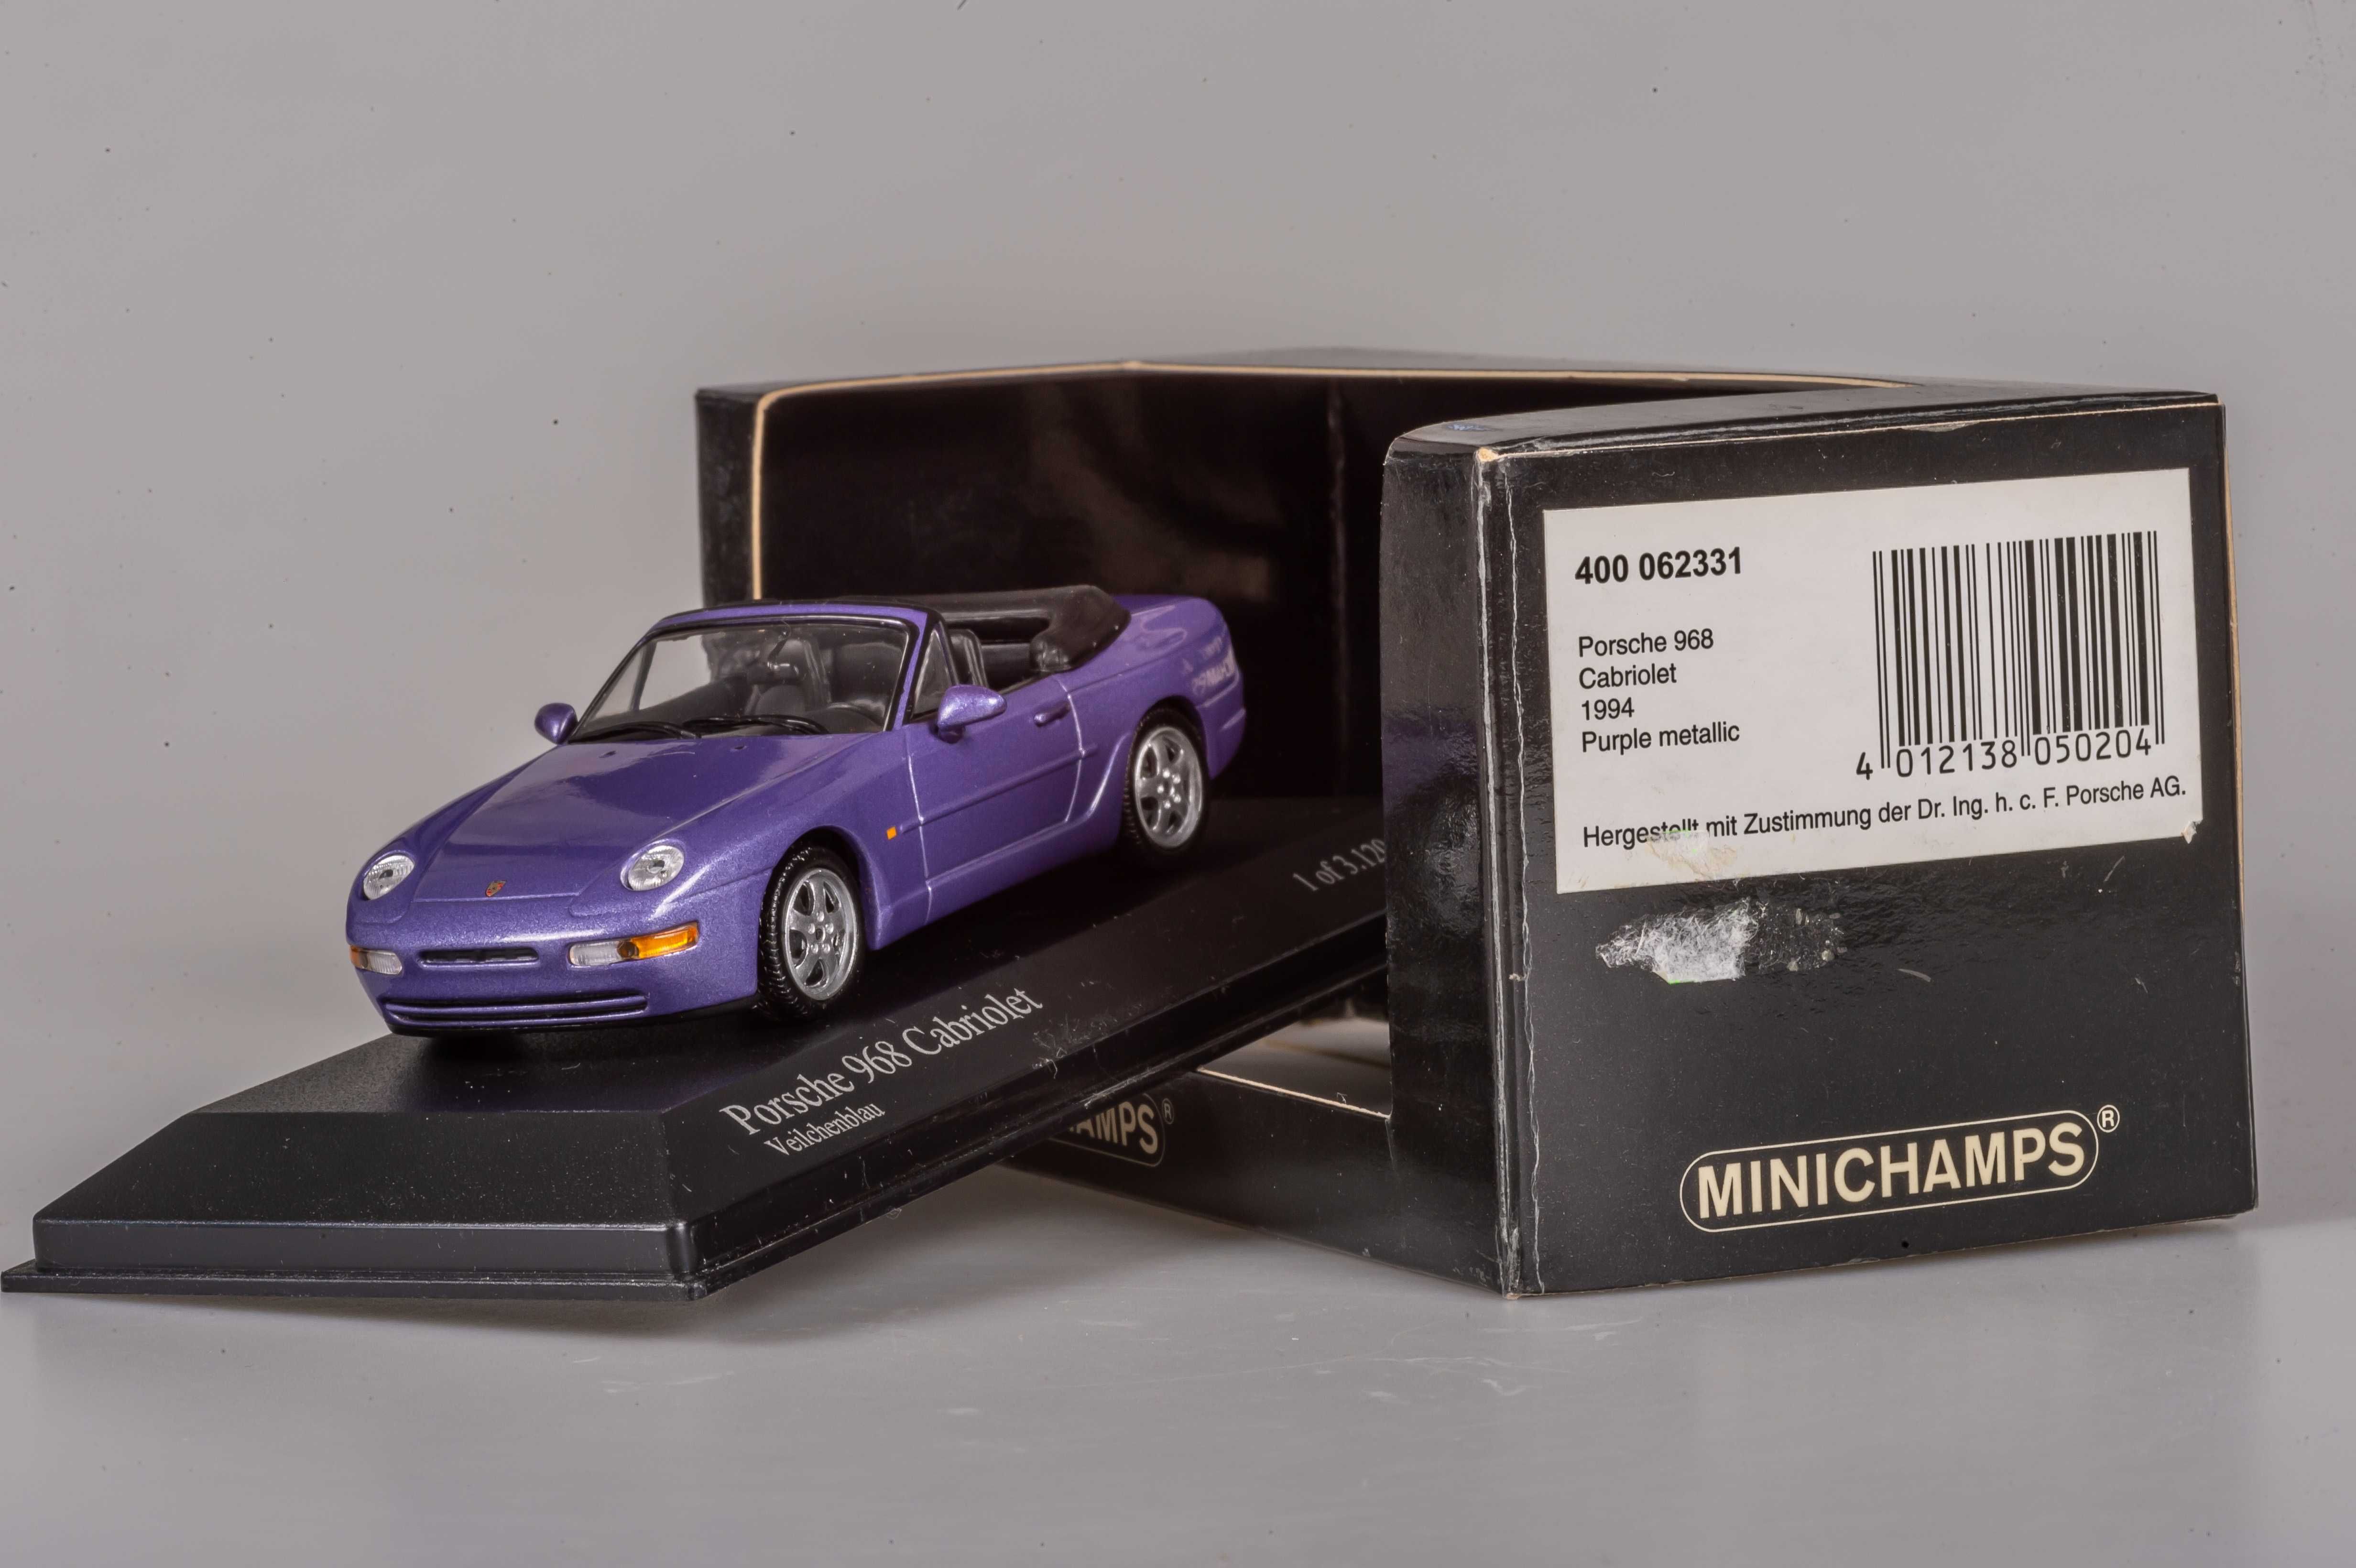 1/43 macheta Porsche 968 cabriolet - minichamps